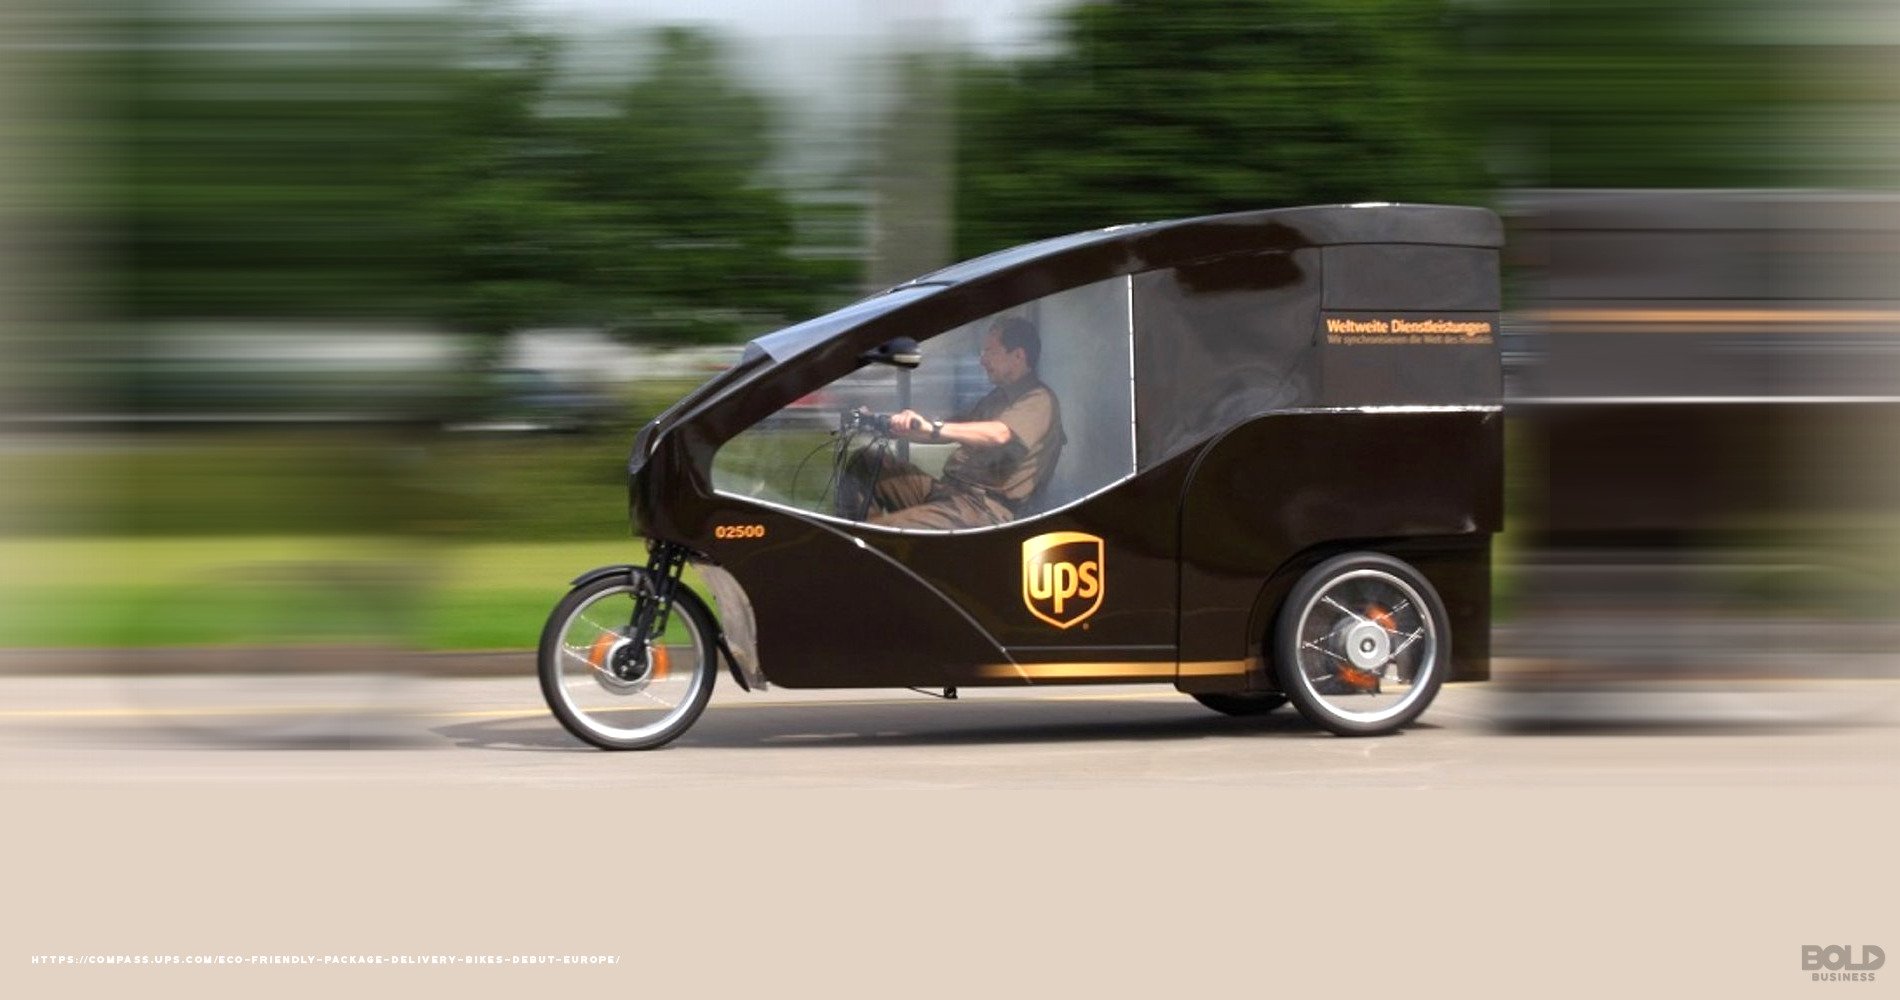 3-wheeled UPS mini vehicle in motion